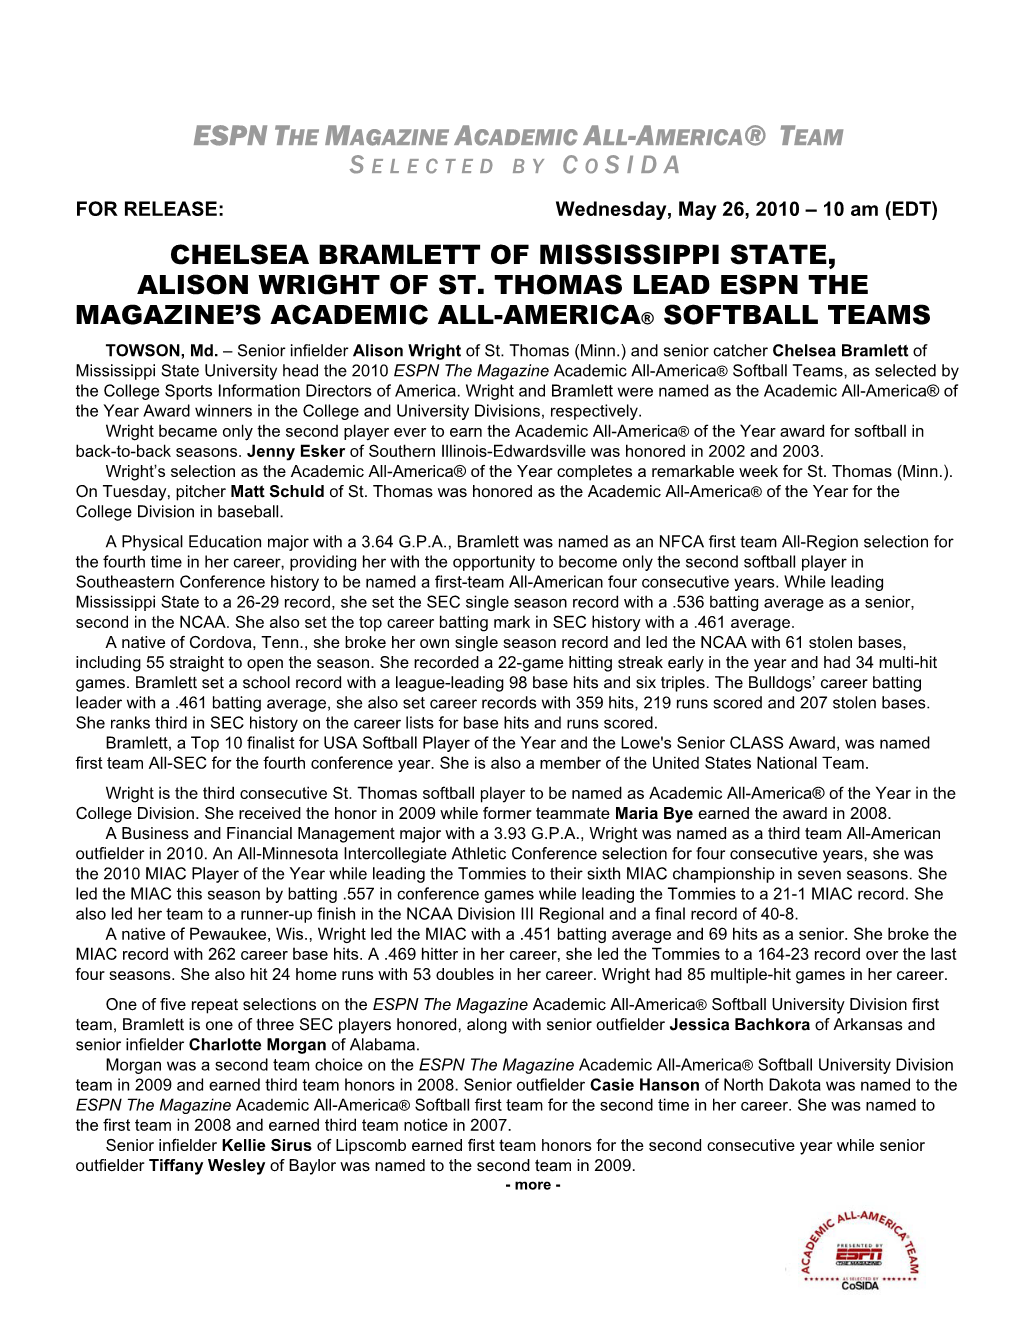 2010 Softball Academic All-America® Teams